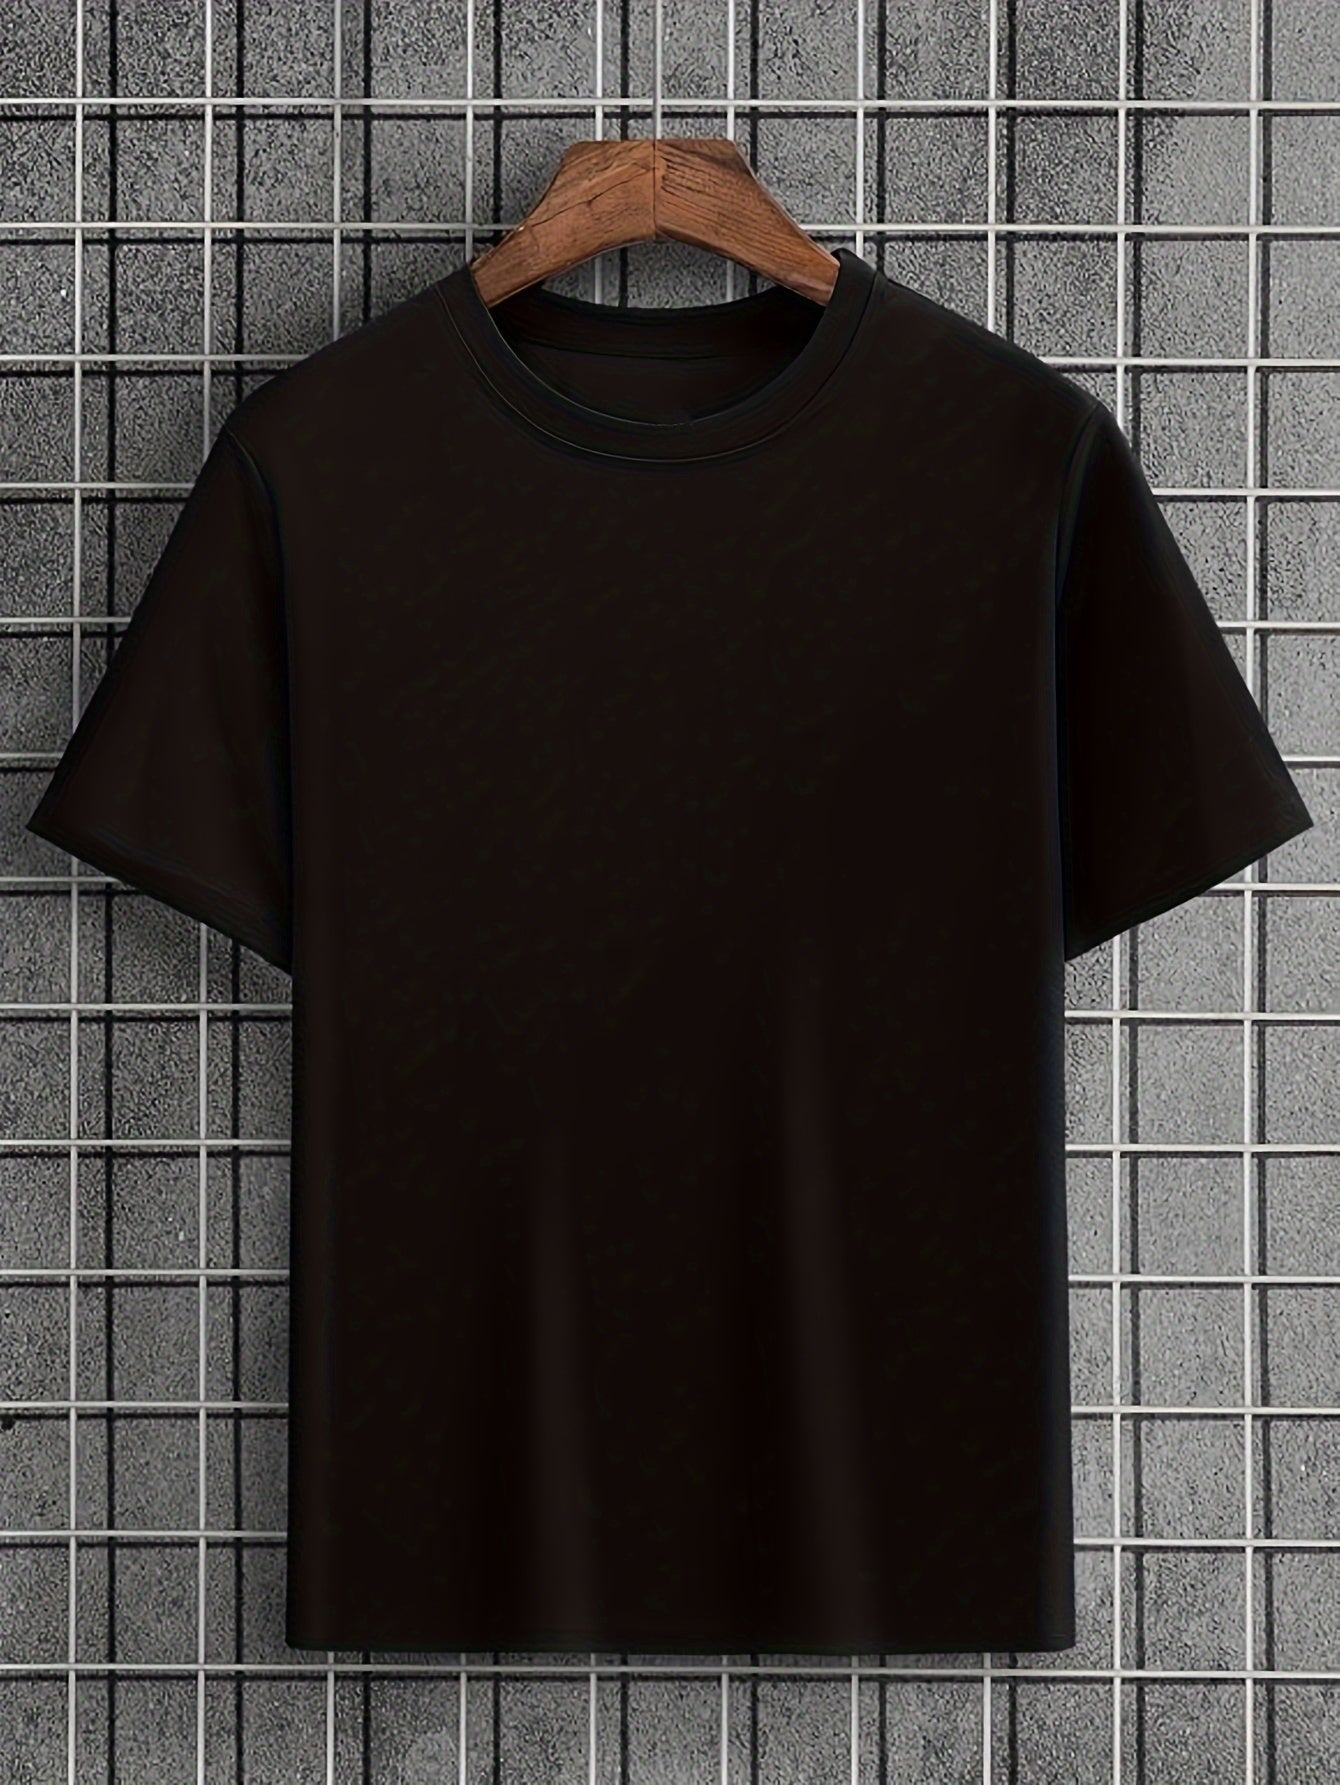 Men's Printed Eye Pattern T-Shirt - Lightweight & Sporty Design